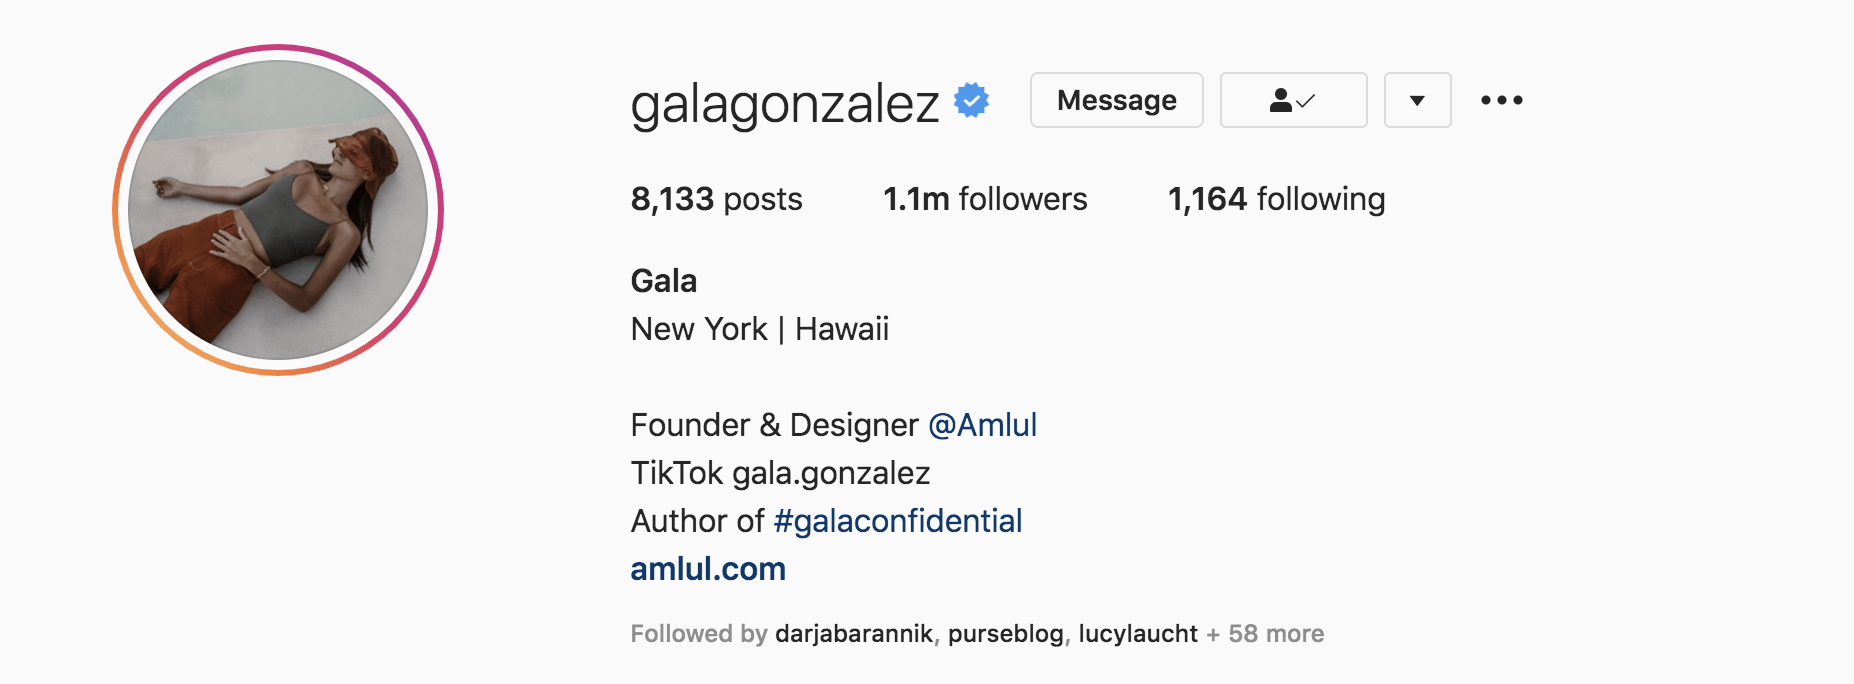 Top Fashion Influencers - Gala Gonzalez